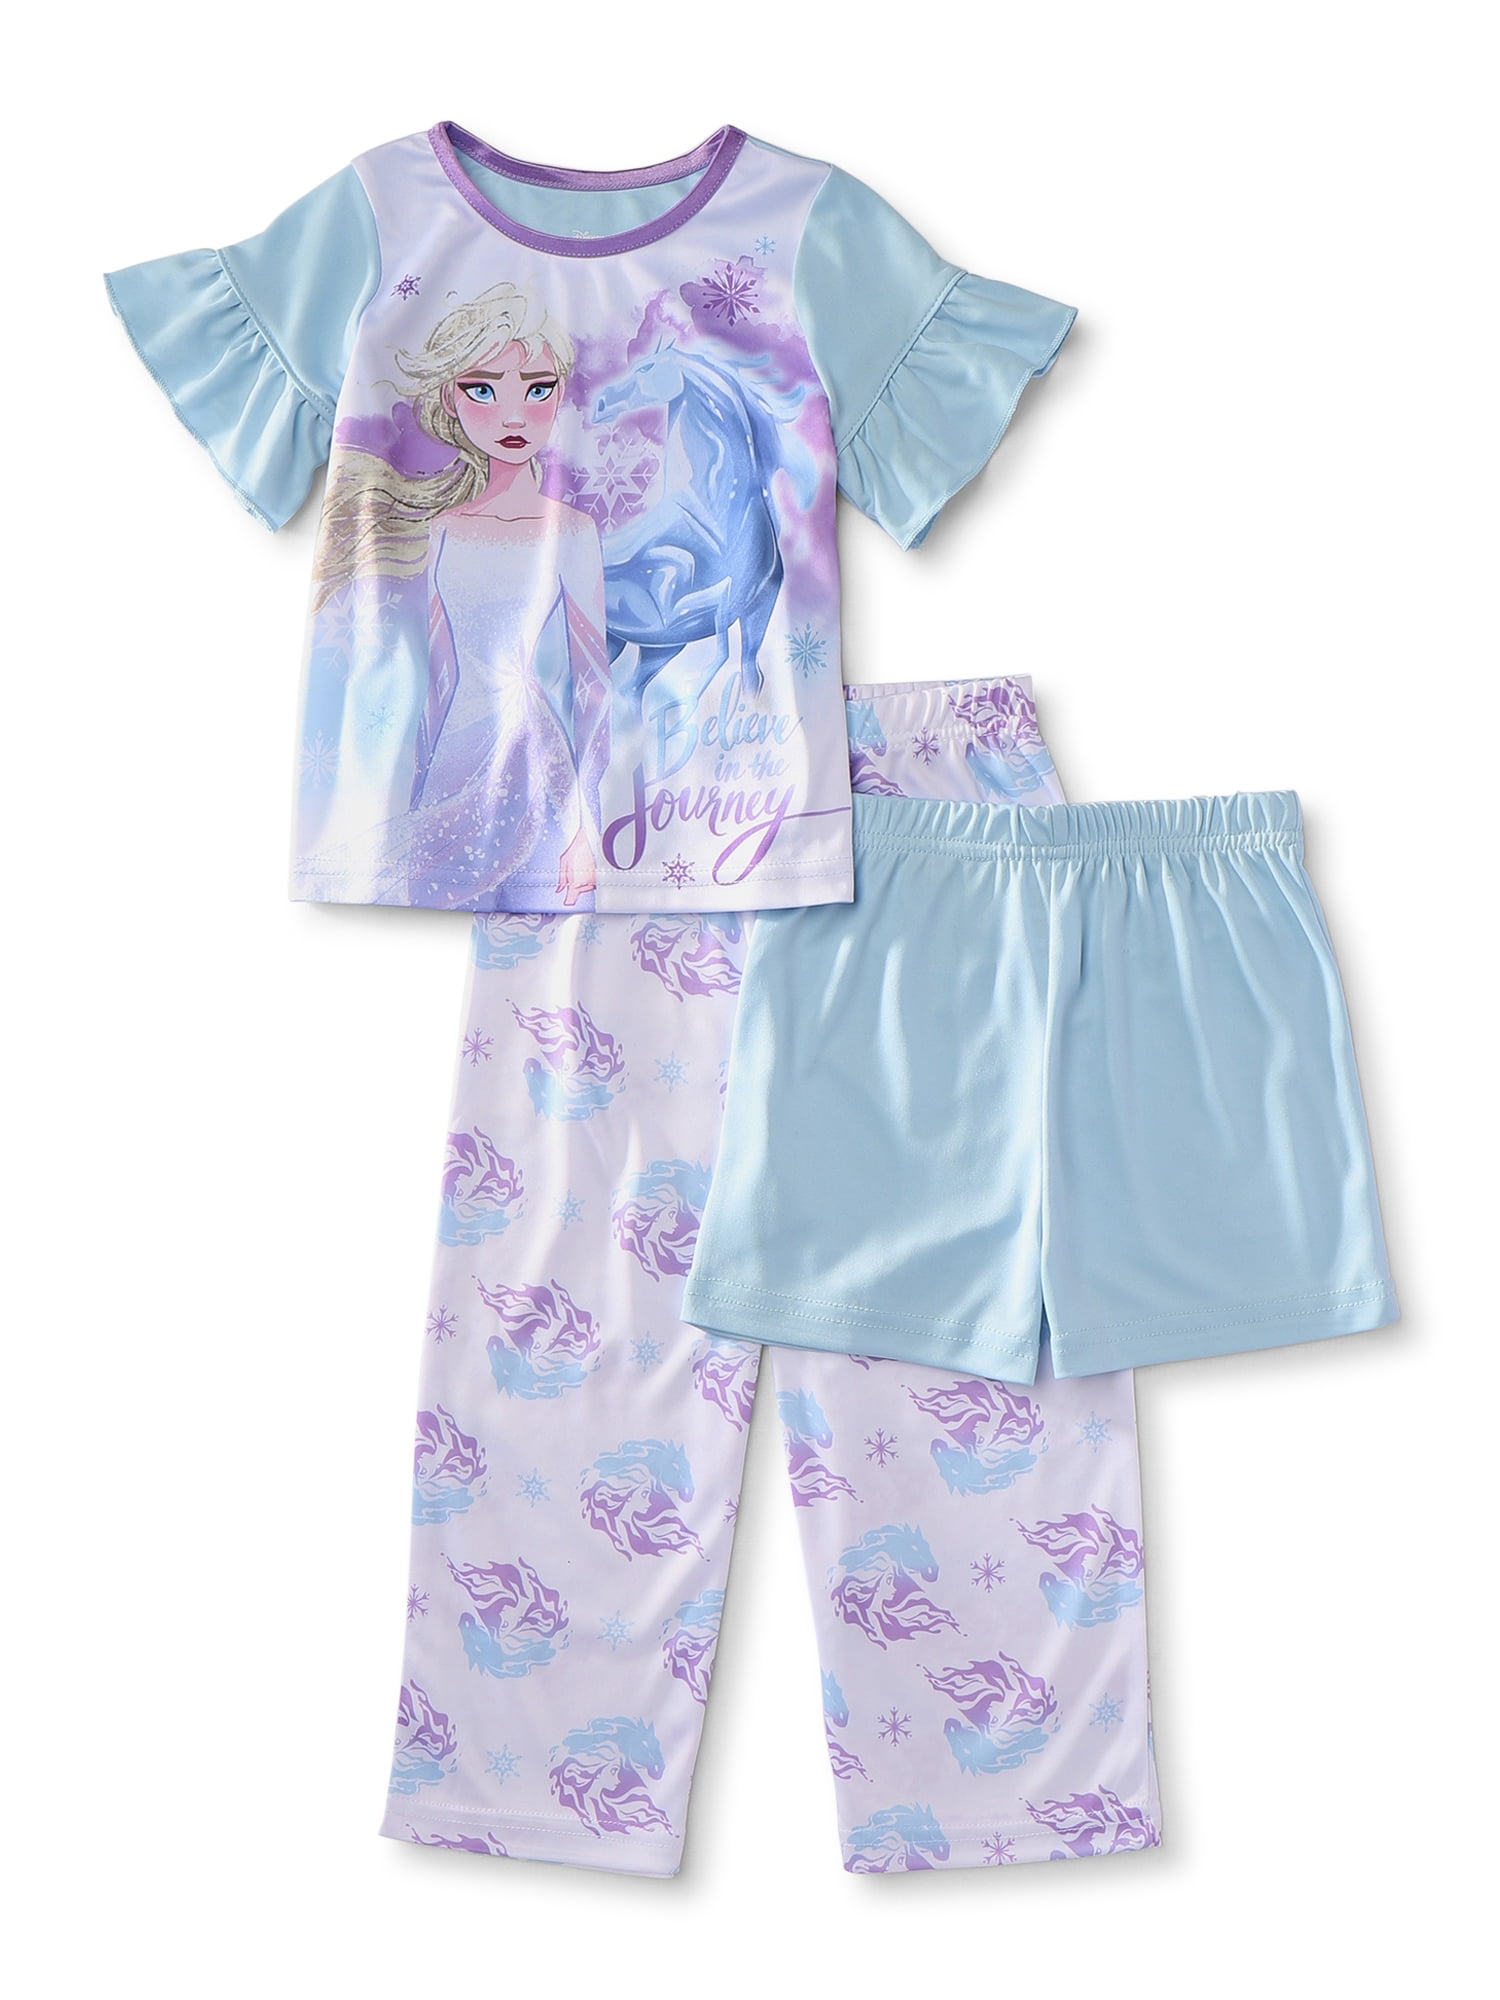 Girls Kids Children Frozen Short Pyjamas pjs T-Shirt Shorts Set Age 2-8 years